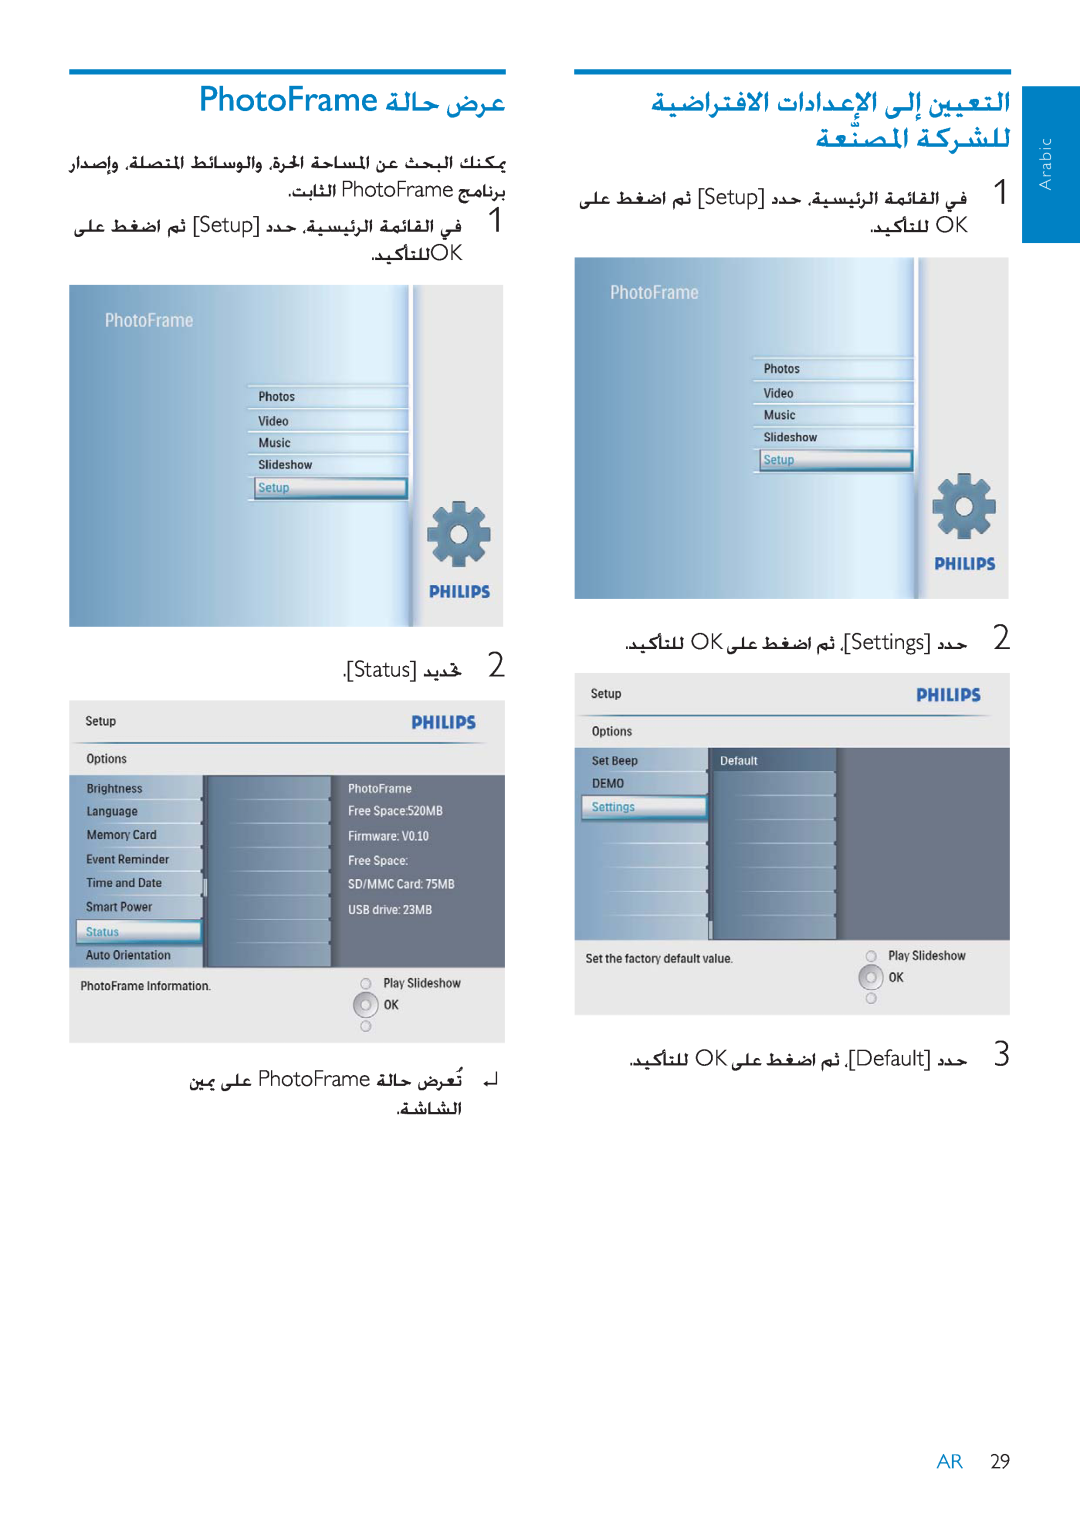 Philips SPF2007 manual PhotoFrameǀŽƾŲȩǍŸ, ǀƯƶƫƓȚȿ ǀżǍƪƴŽ, ǀƸǤȚǍƄźǽȚȝȚȢȚǋŸȁȚǟŽȘƞƸƯƄŽȚ, Arabic 